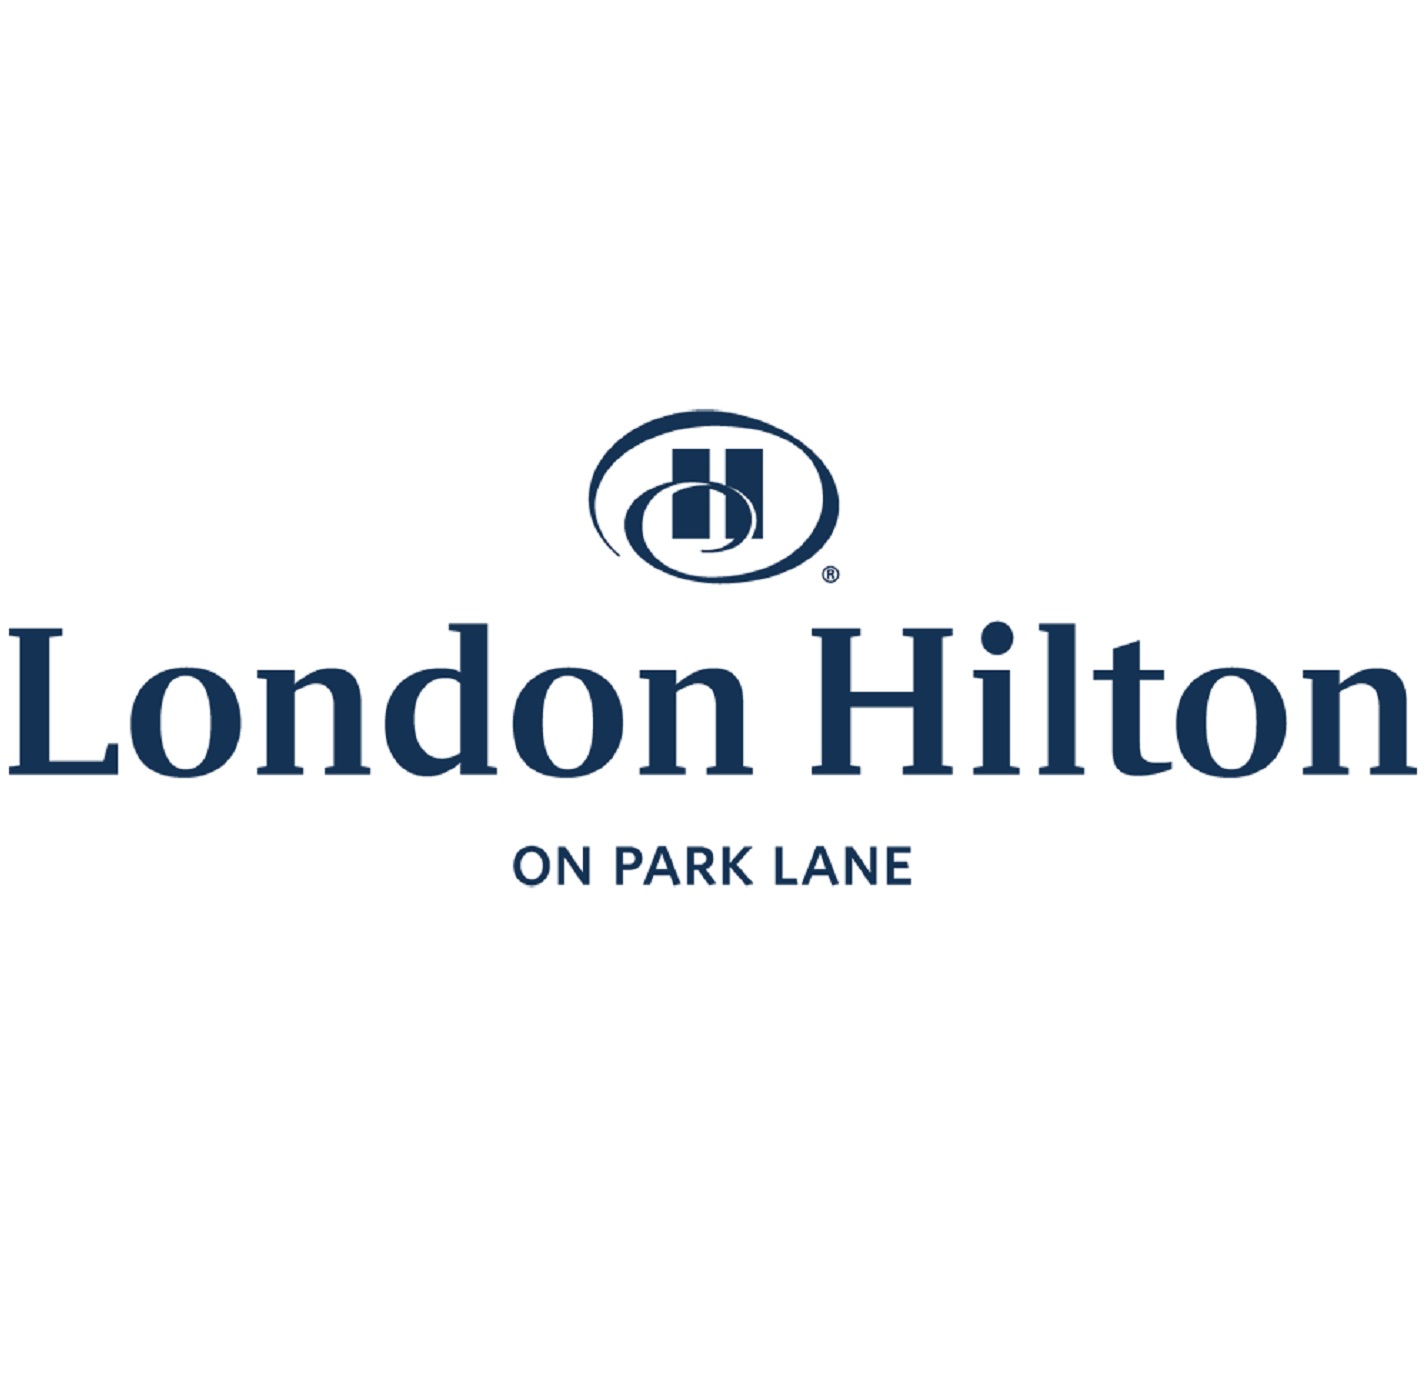 London Hilton on Park Lane